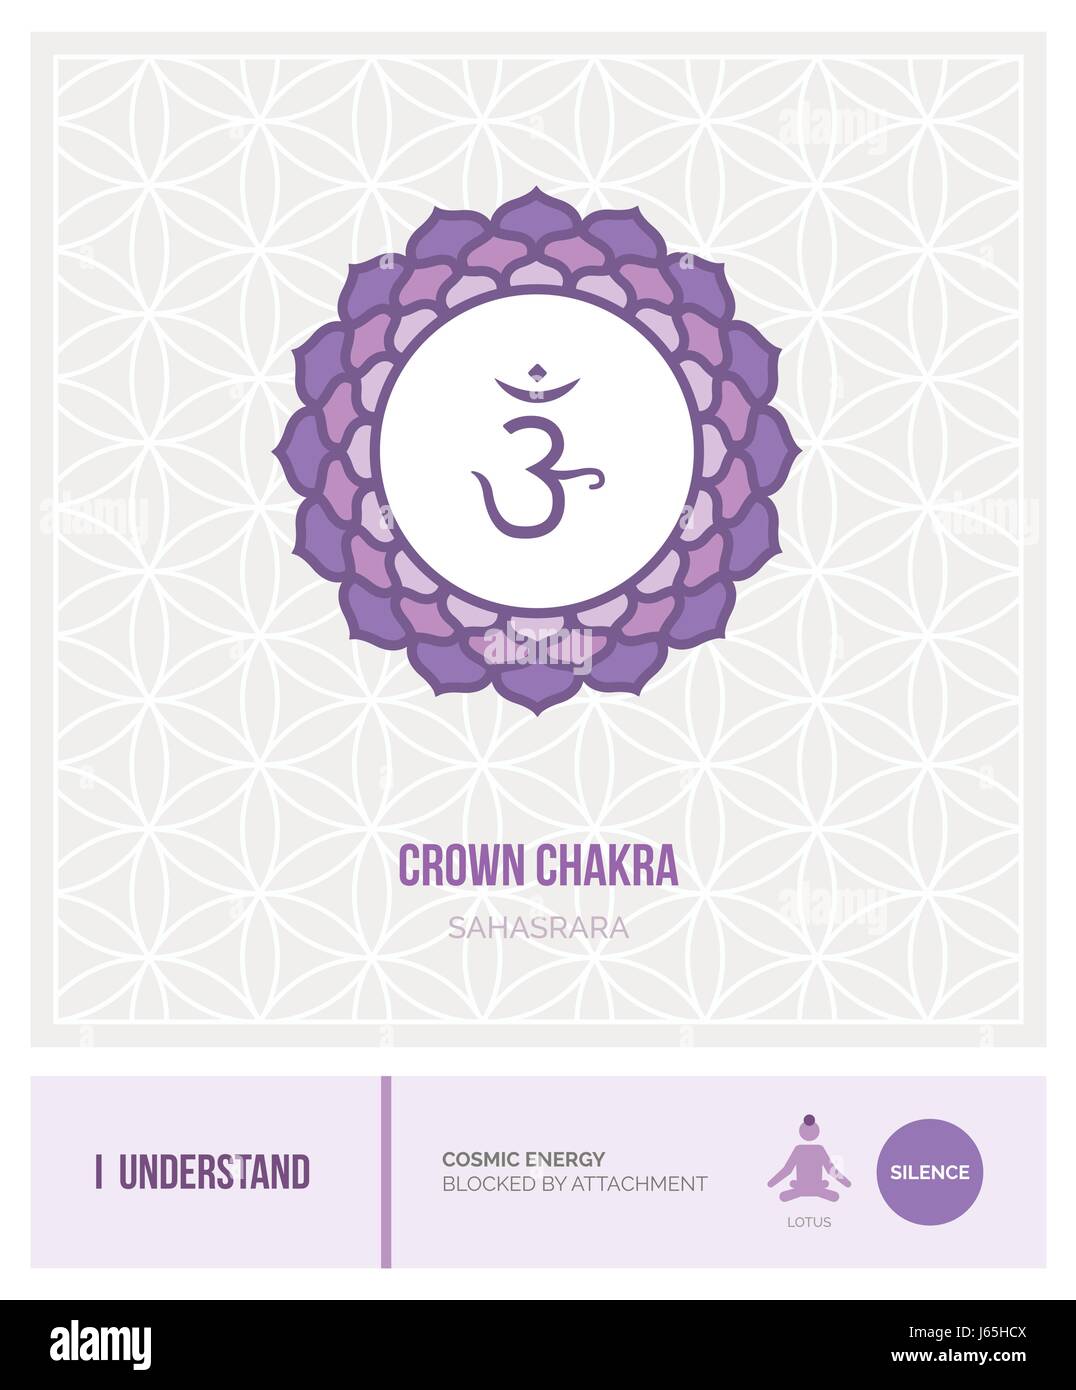 7 Kundalini Yoga Postures To Clear The Chakras – Awaken